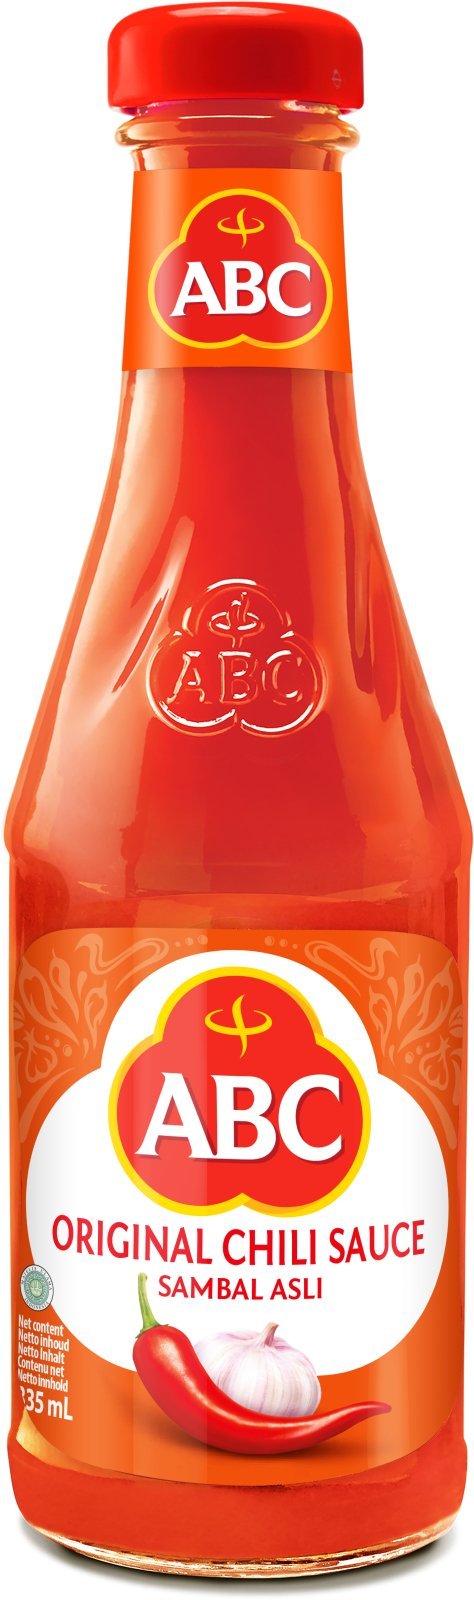 ABC Original Chili Sauce 335ml - MAOMAO